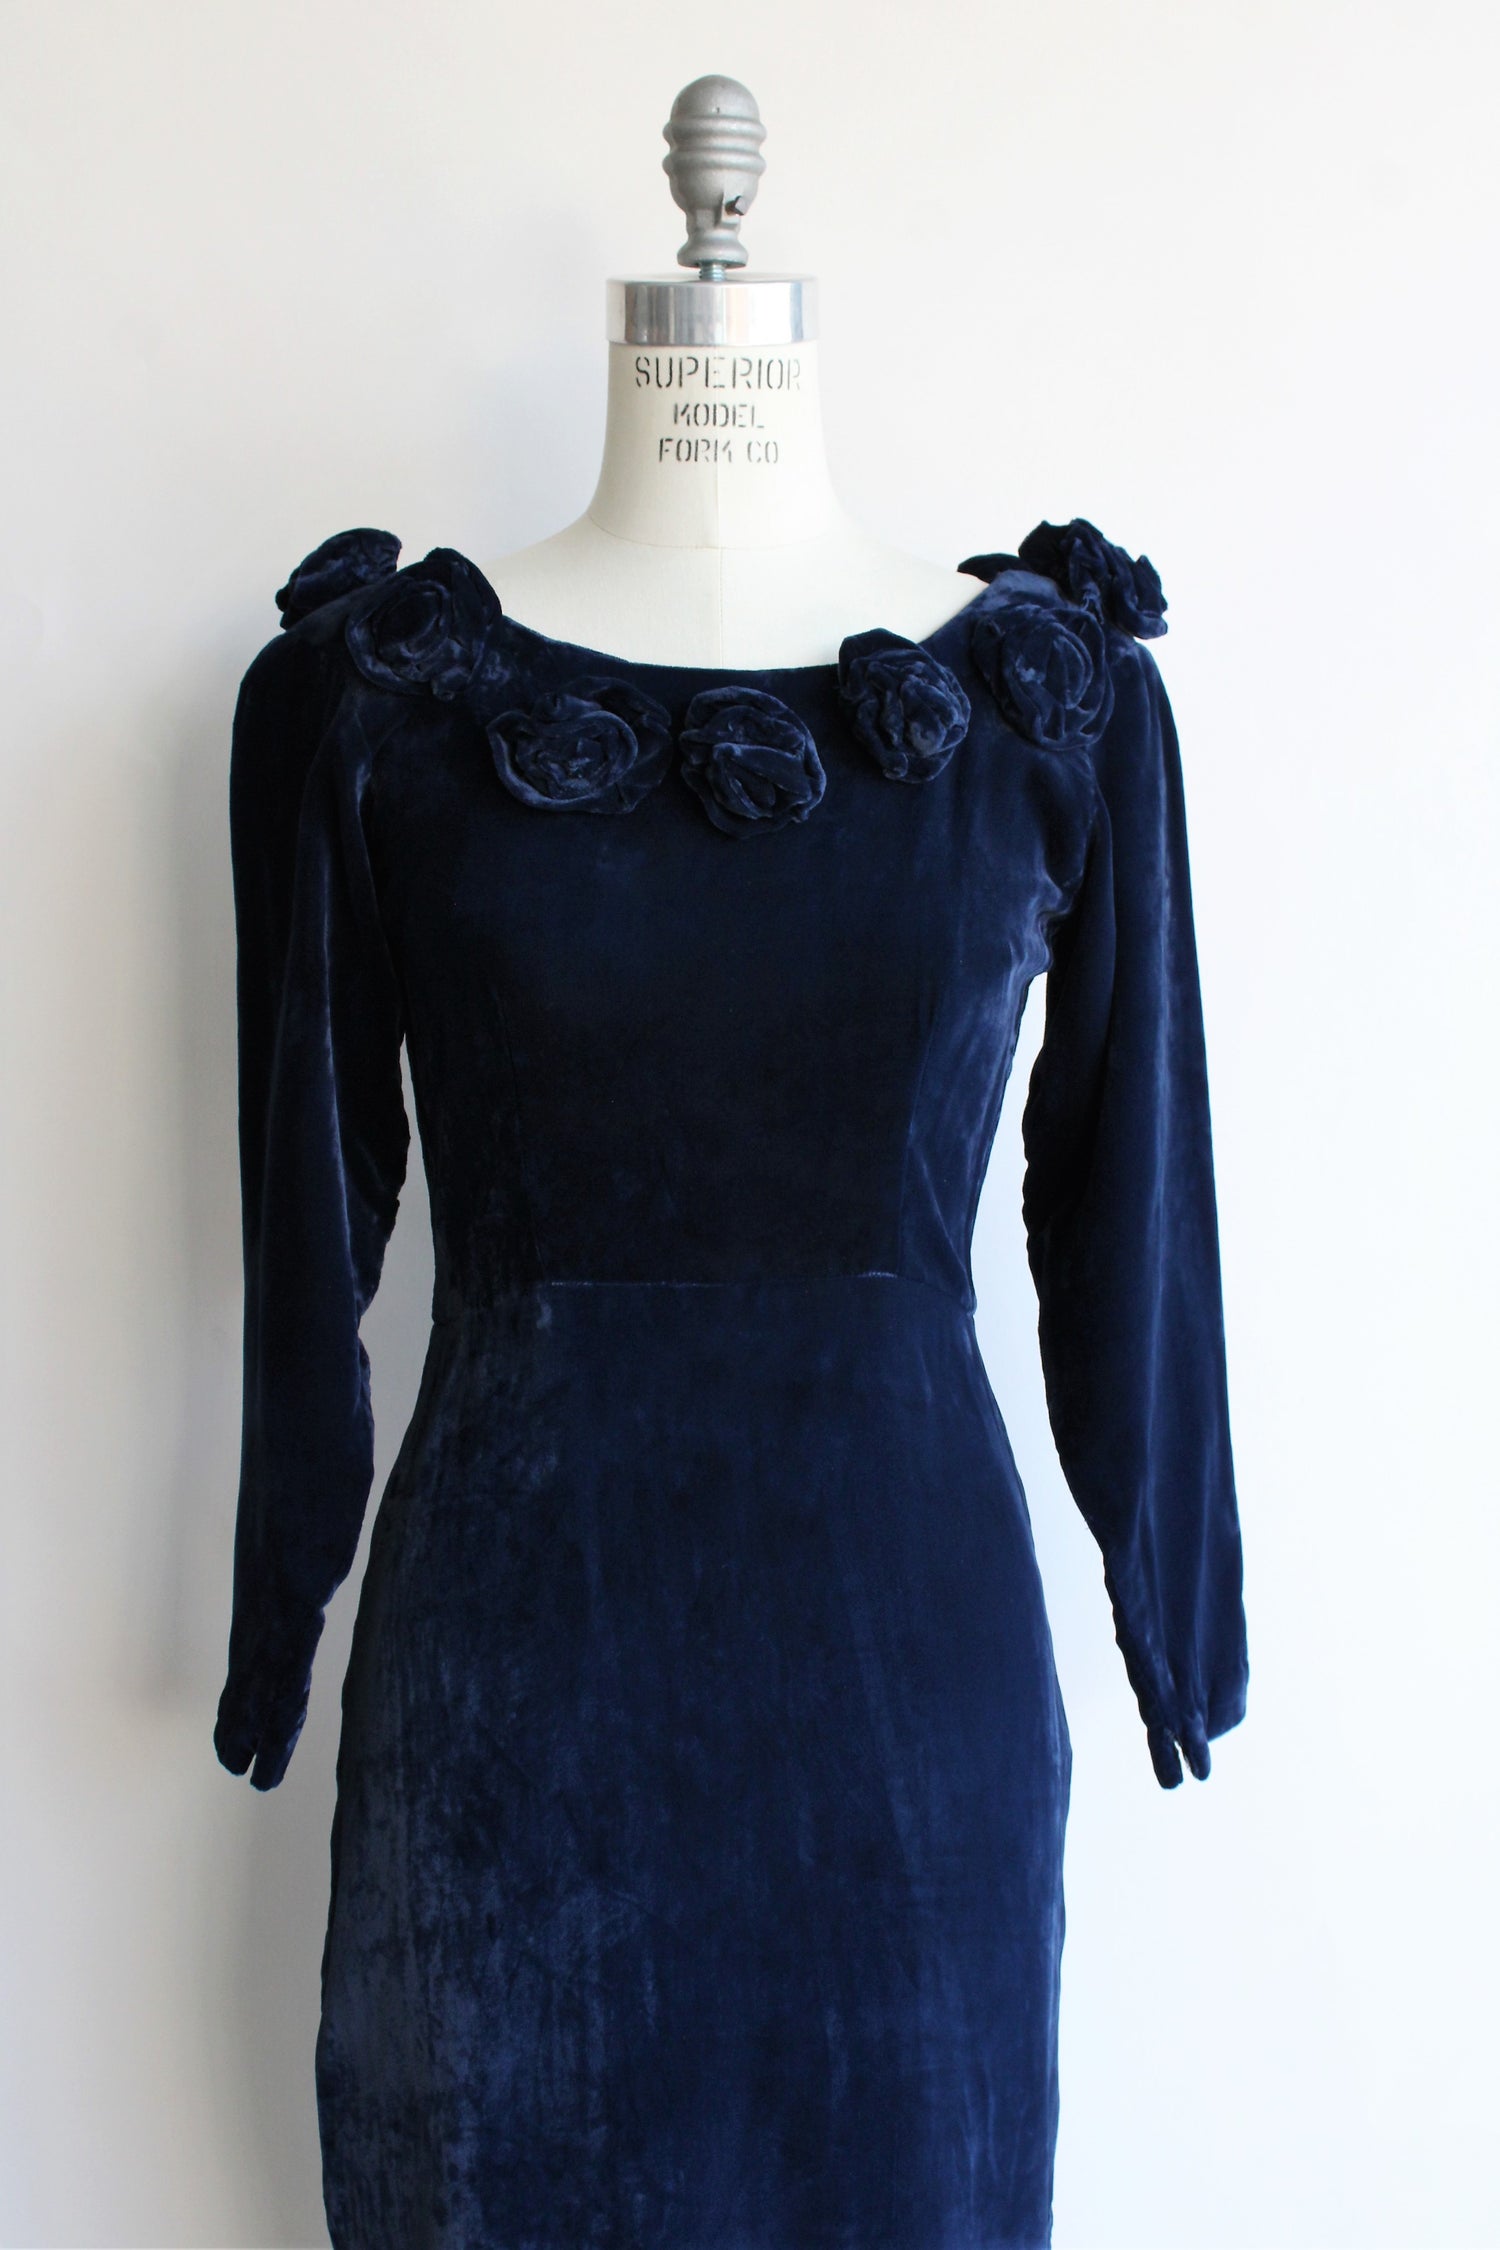 Vintage 1950s Style Blue Velvet Wiggle Dress With Rose Trim